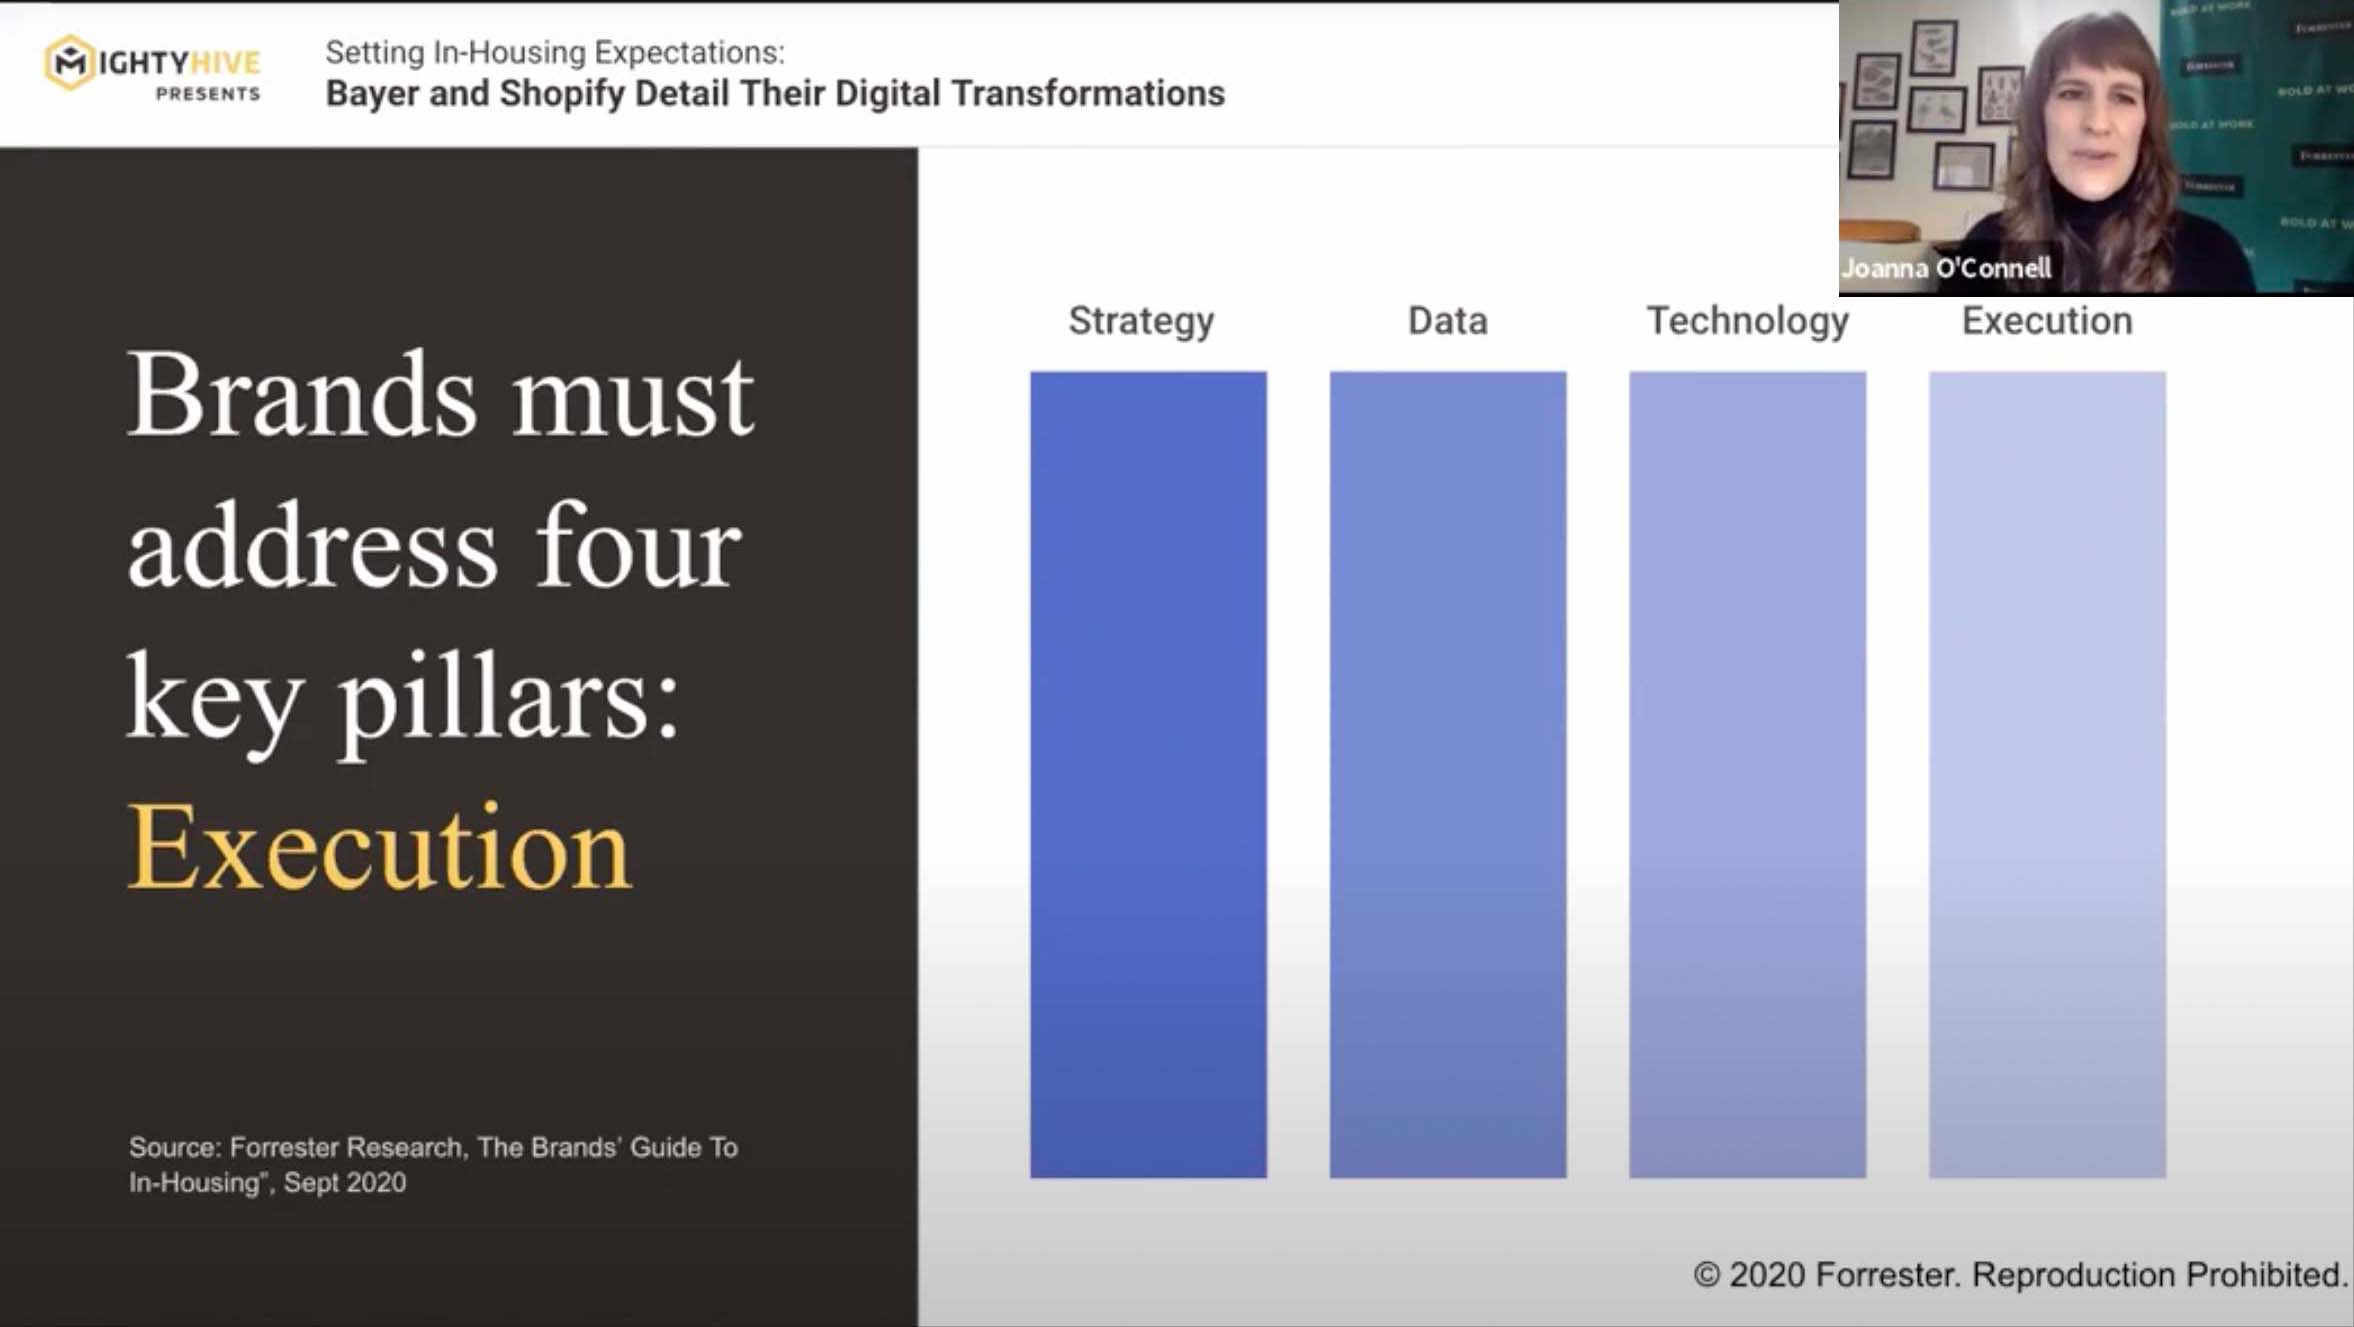 Joanna O'Connell explains the four key pillars of digital transformation